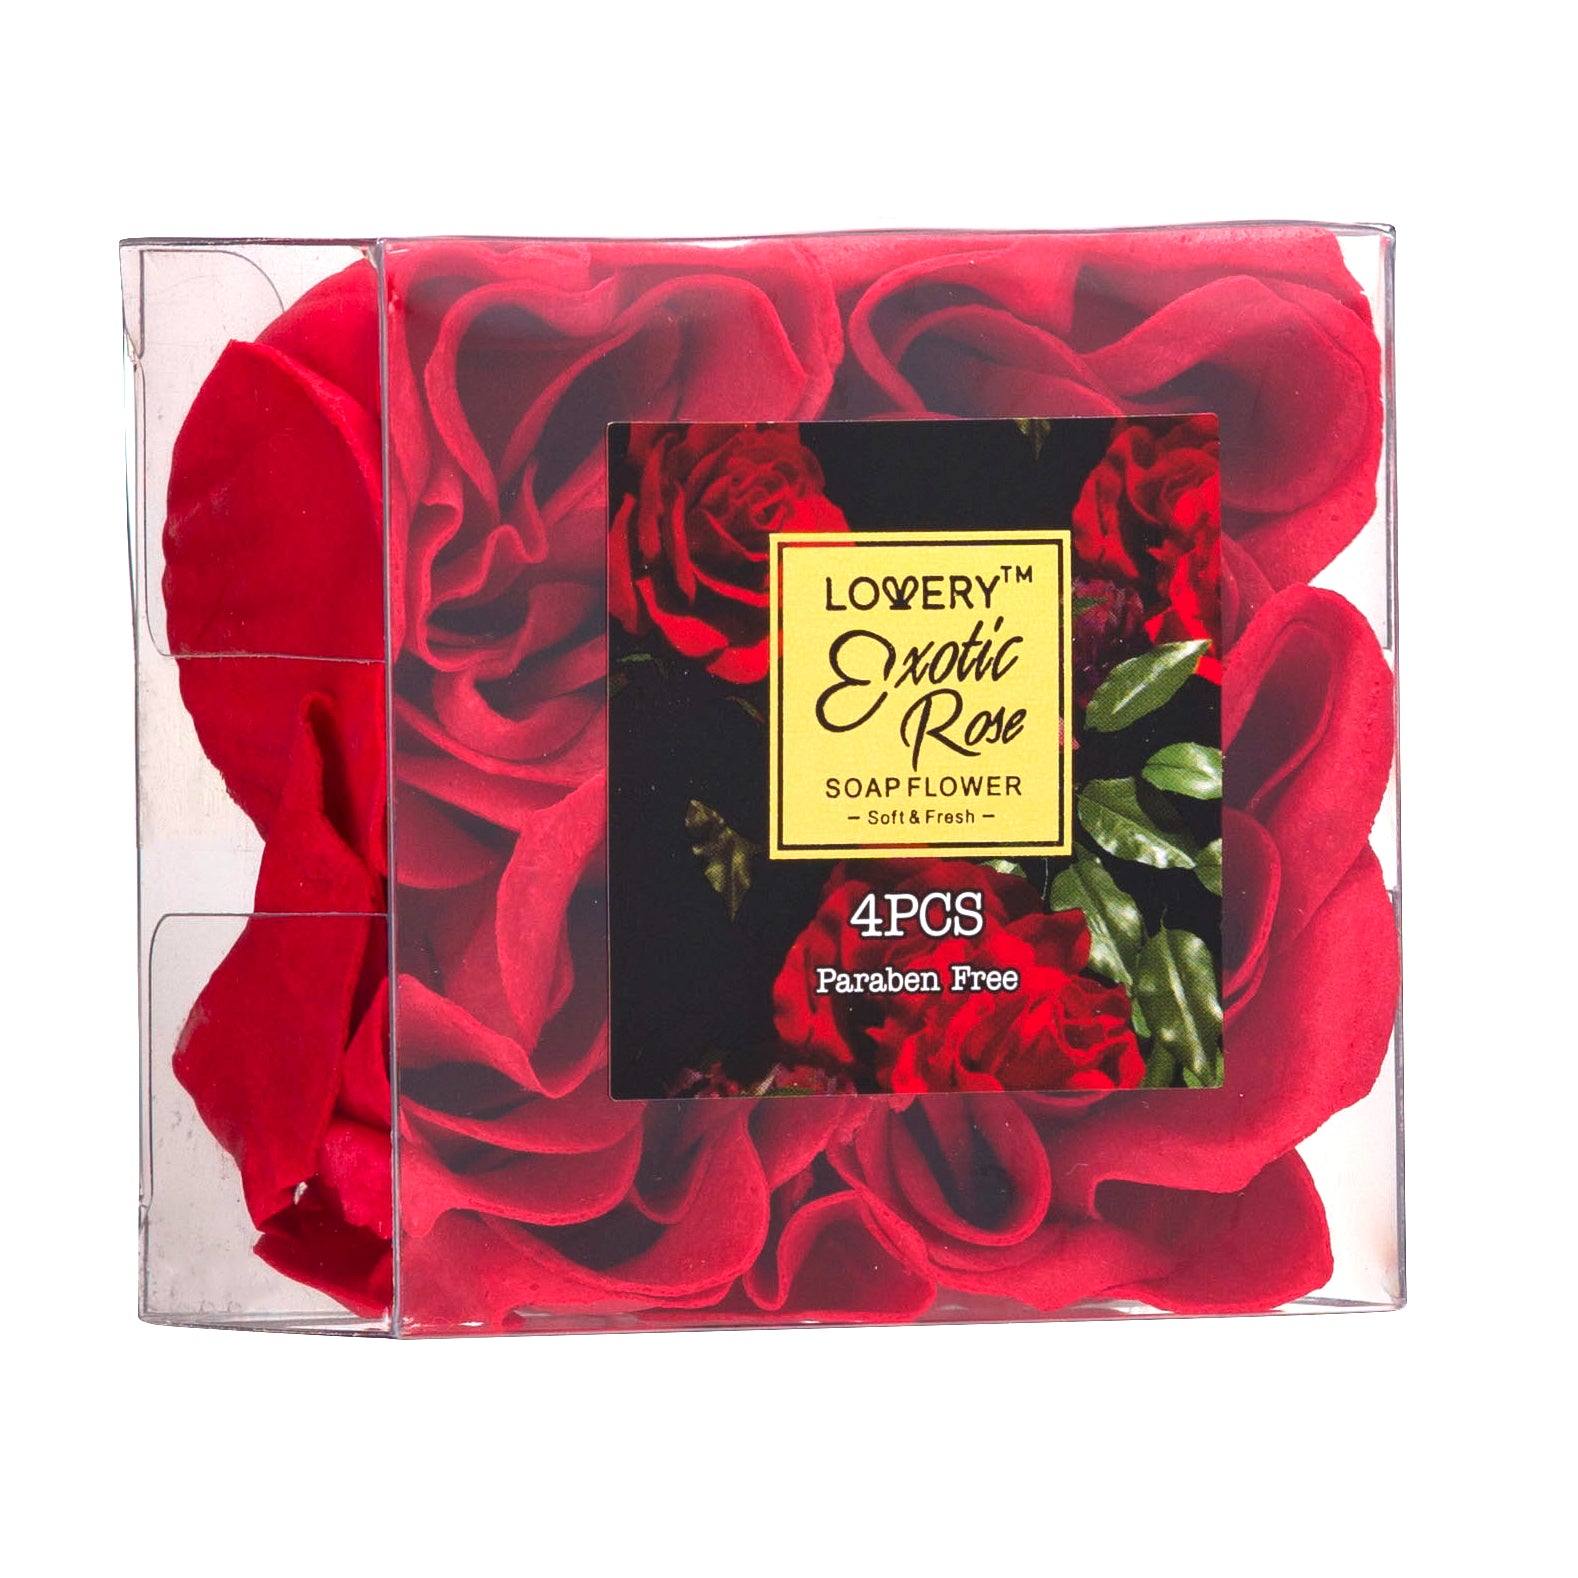 Luxury Spa Gift Set - Self Care Gift – Little Flower Soap Co